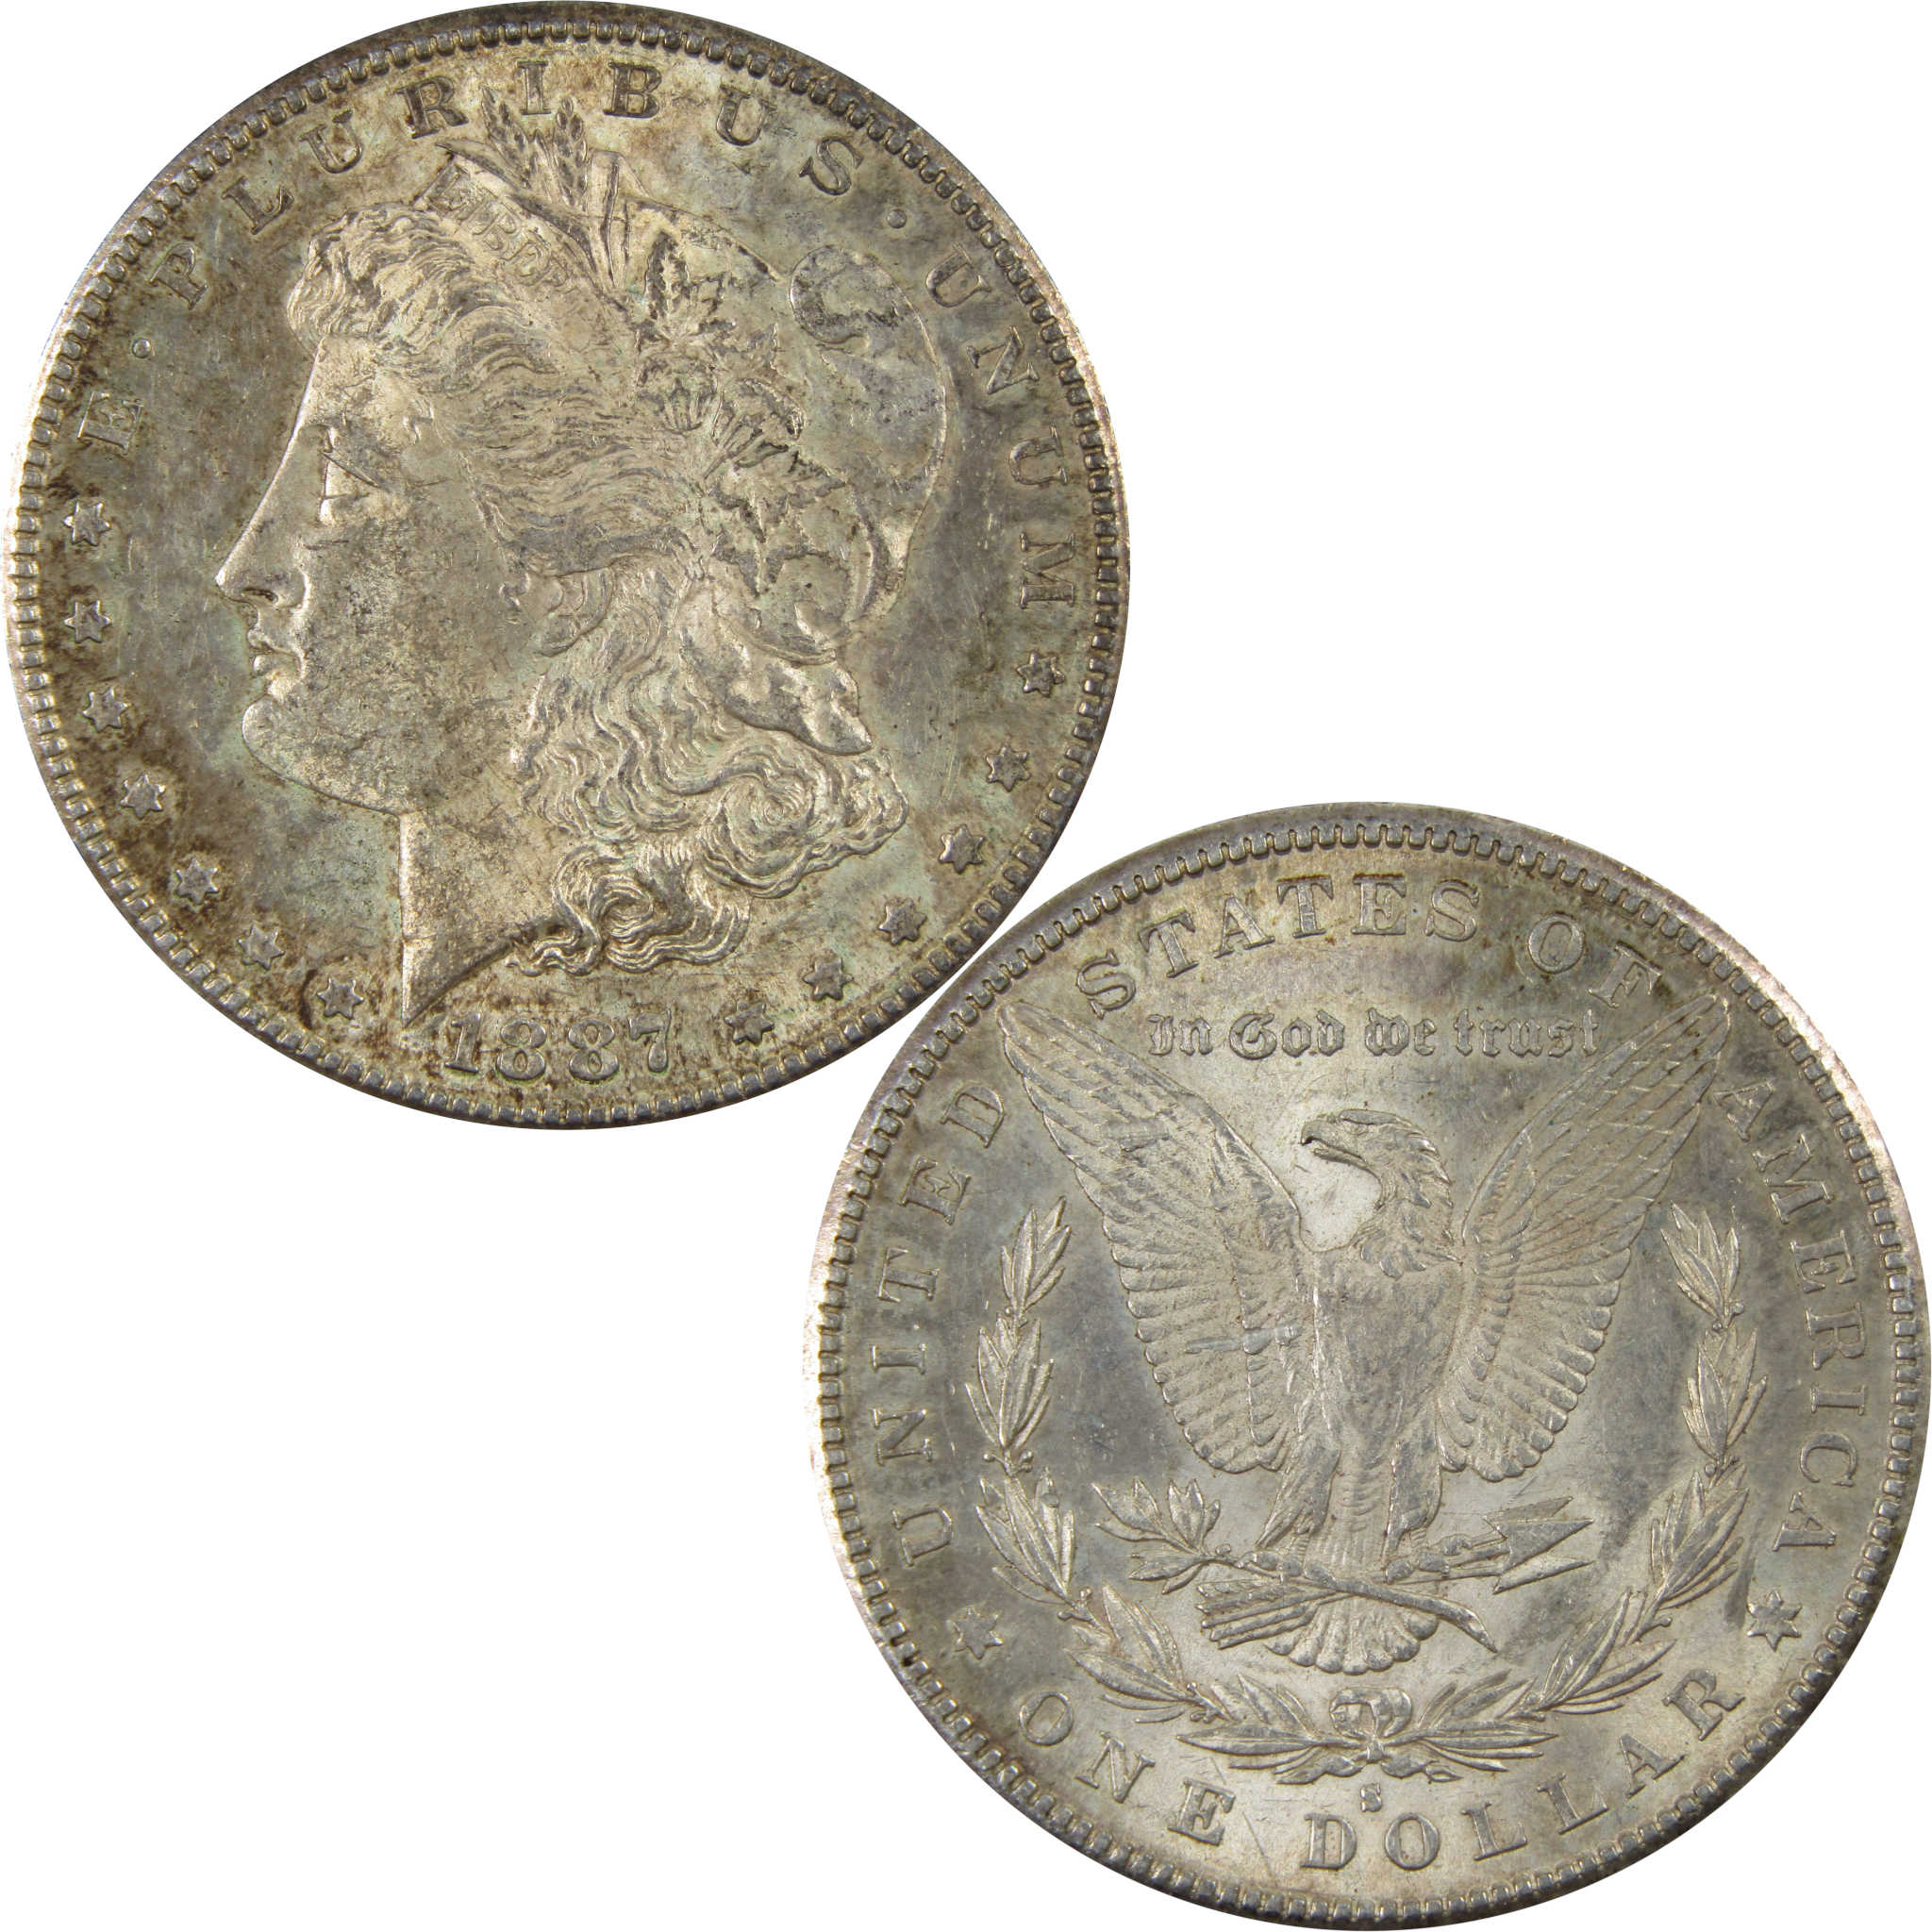 1887 S Morgan Dollar Borderline Uncirculated 90% Silver $1 SKU:I5041 - Morgan coin - Morgan silver dollar - Morgan silver dollar for sale - Profile Coins &amp; Collectibles